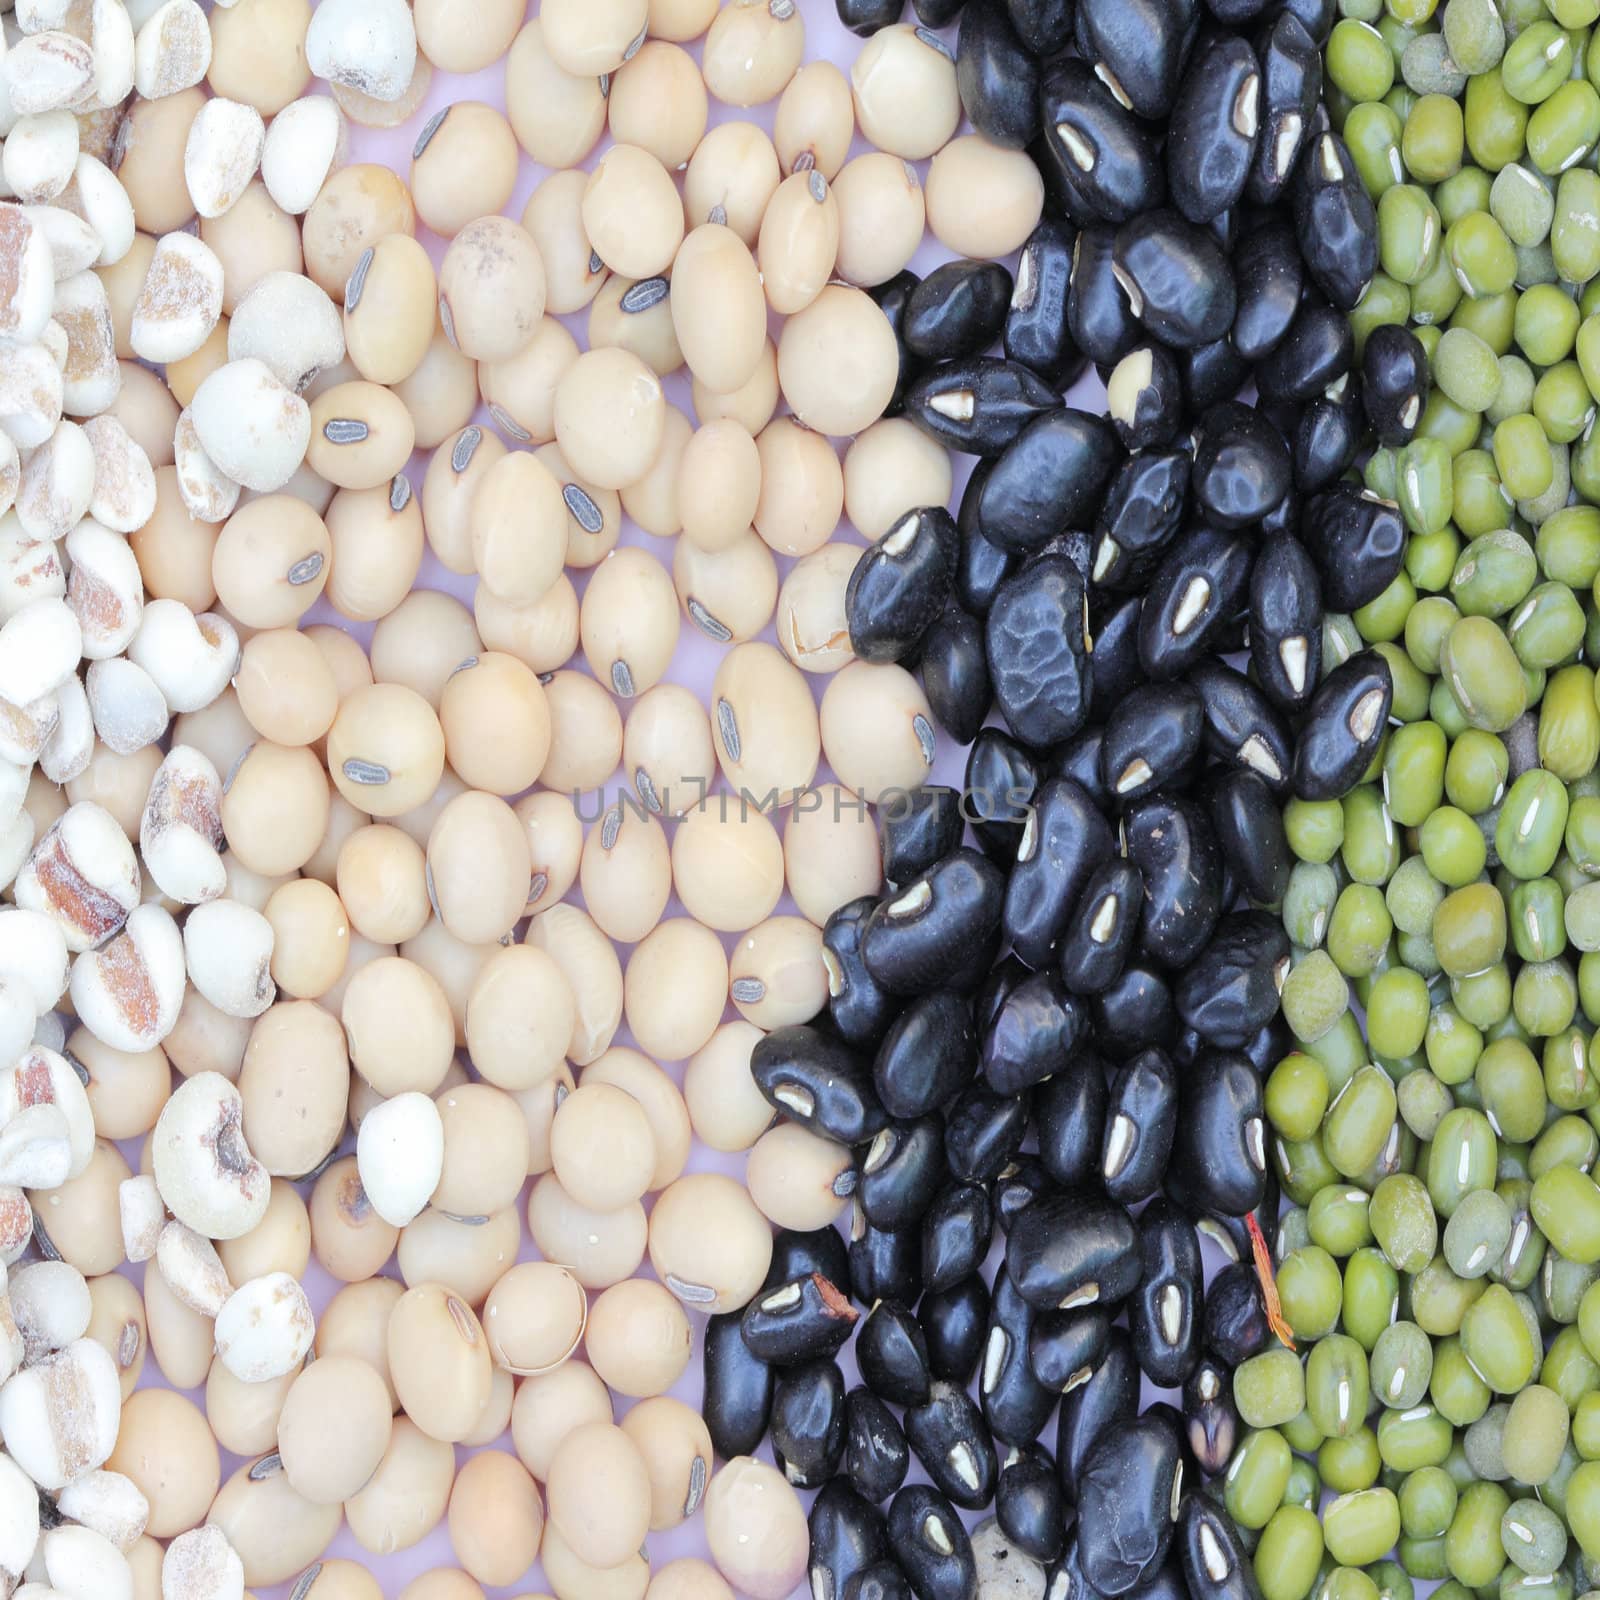 varieties of beans, Joy tear, Soy bean, Black bean, Mung bean